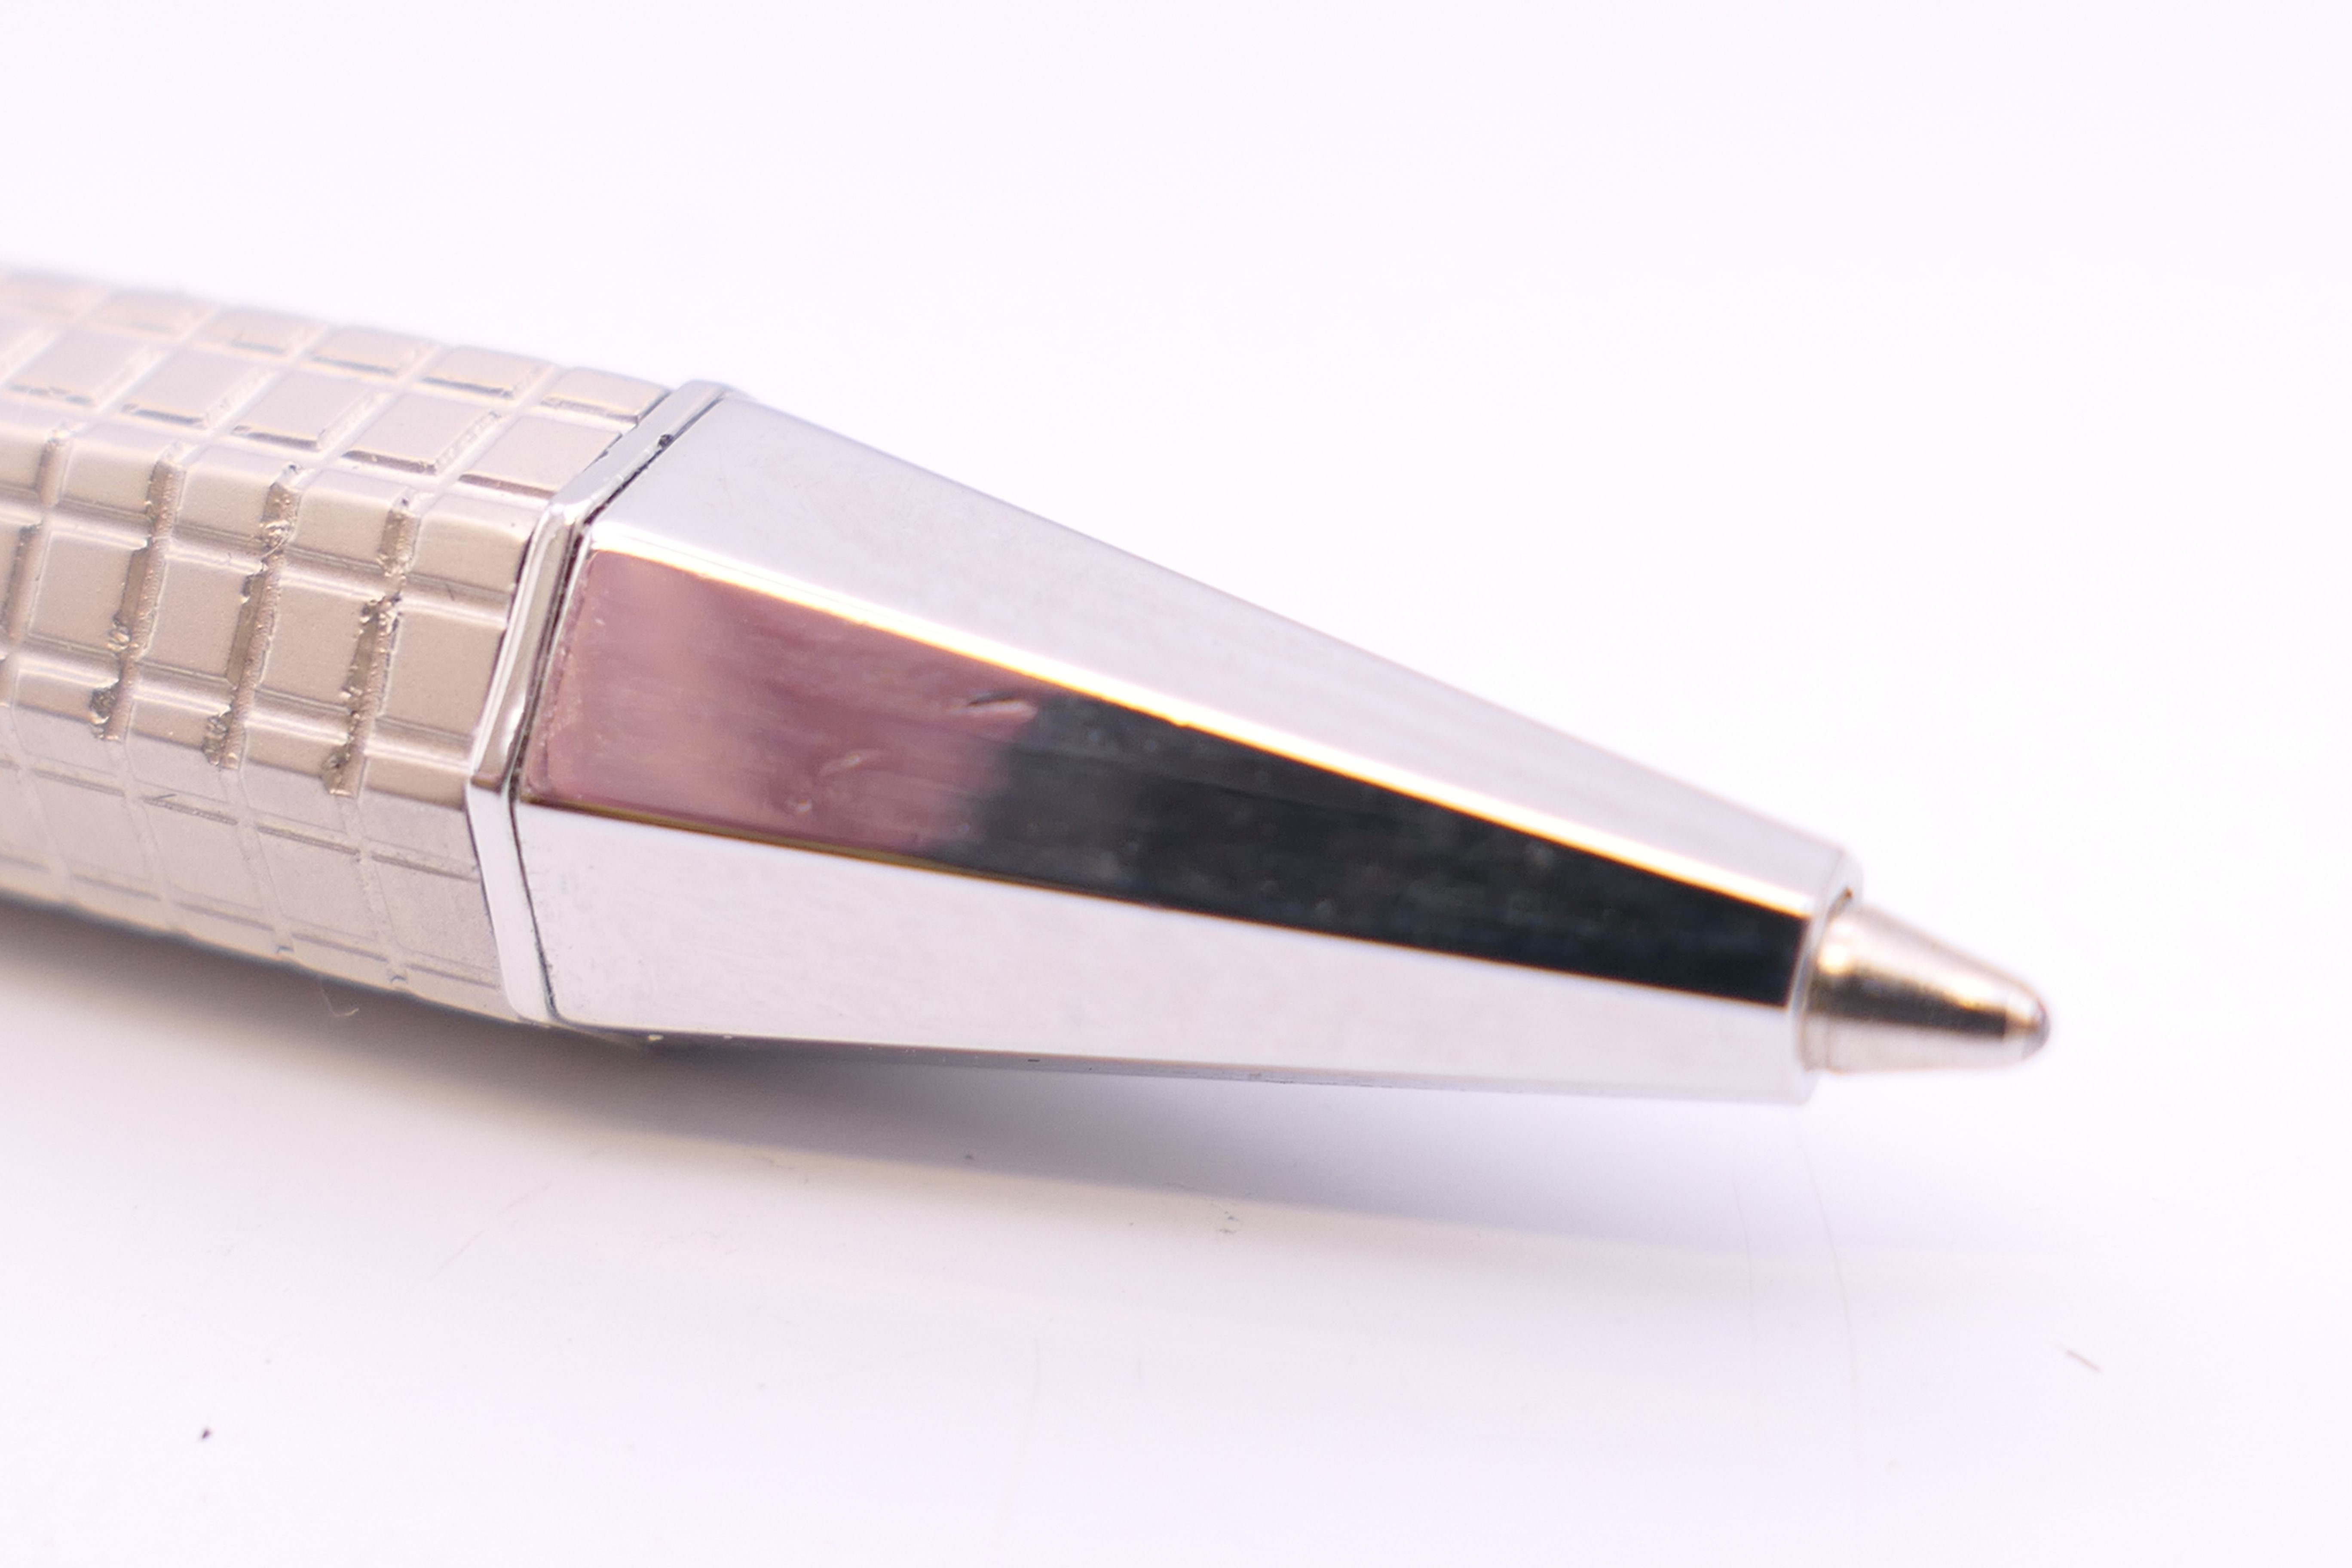 A Audemars Piquet biro pen in original box. - Image 4 of 6